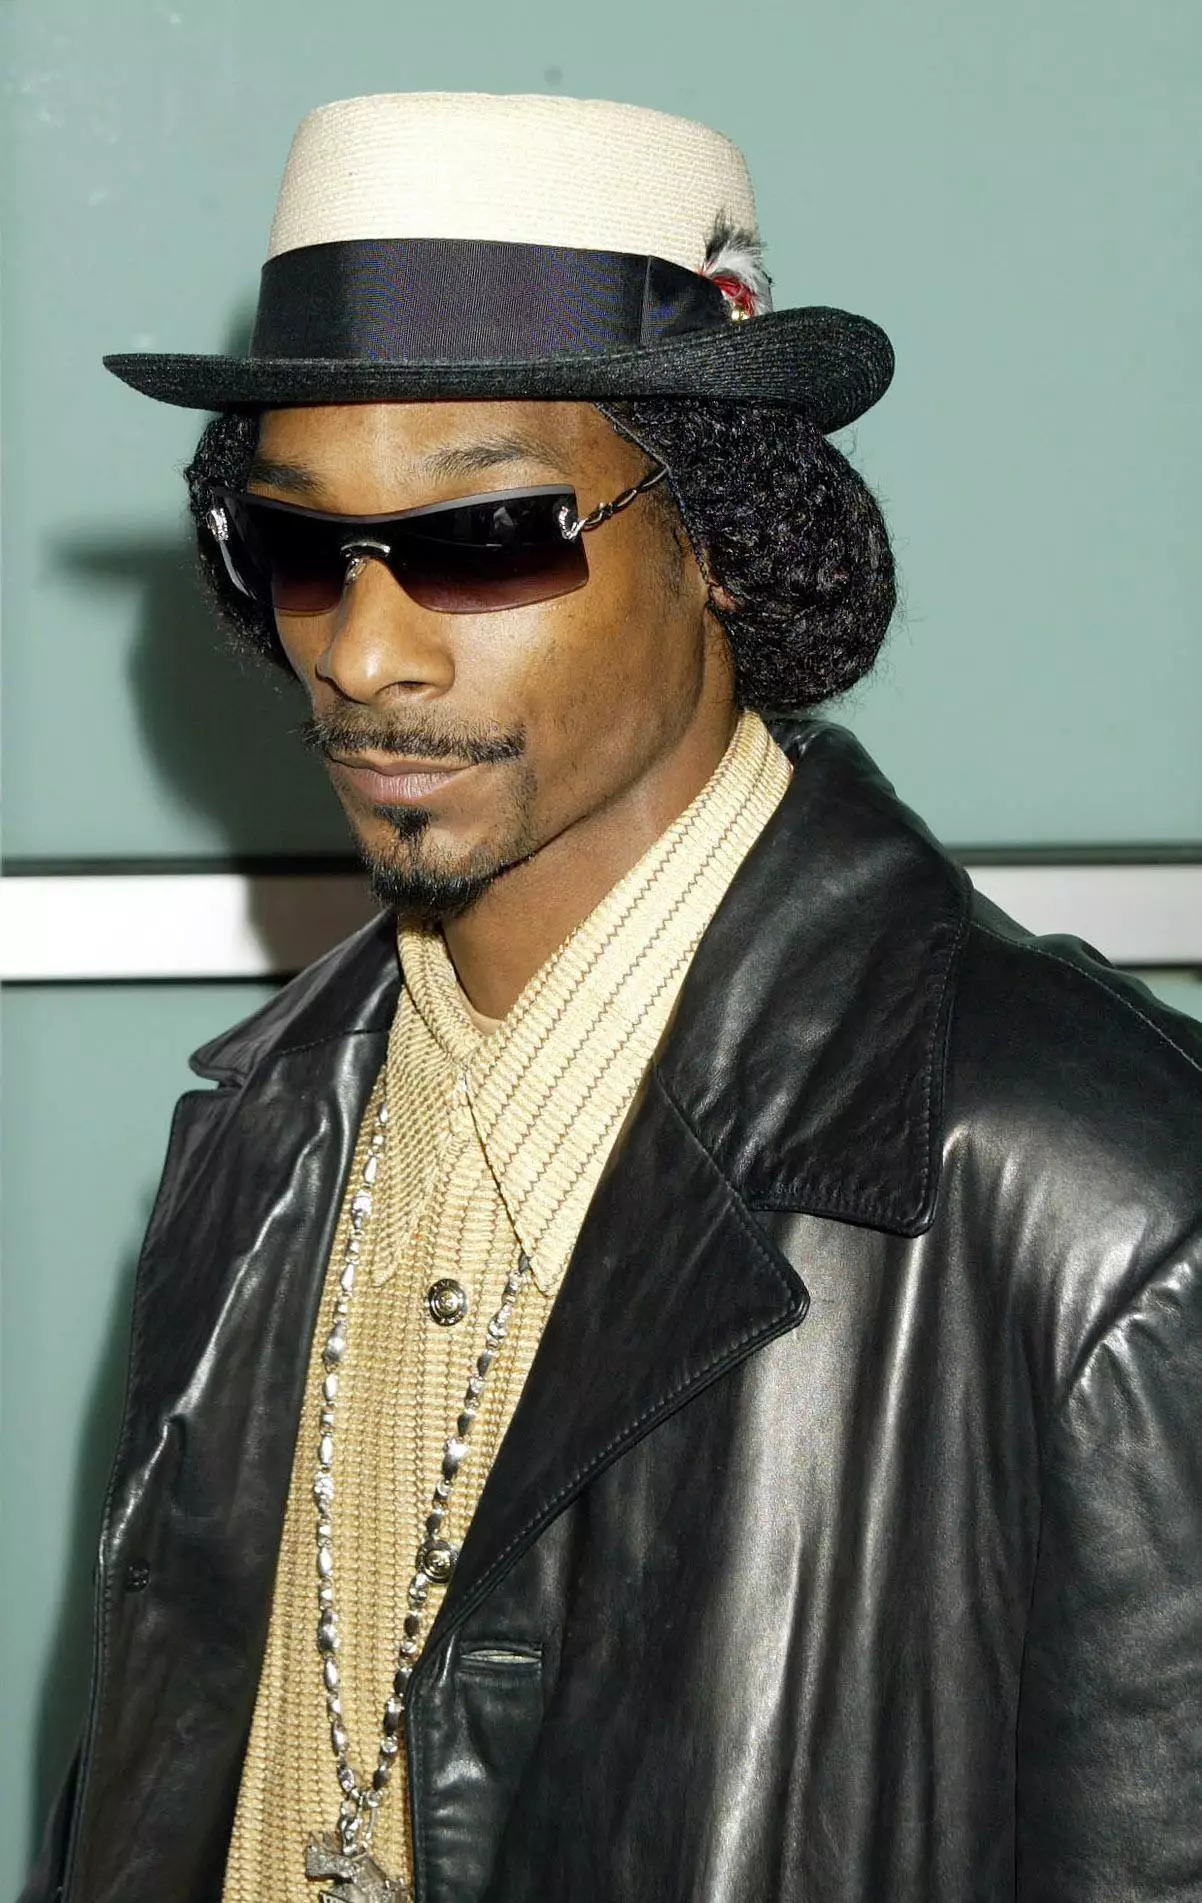 Snoop Dogg's career began at Death Row Records.